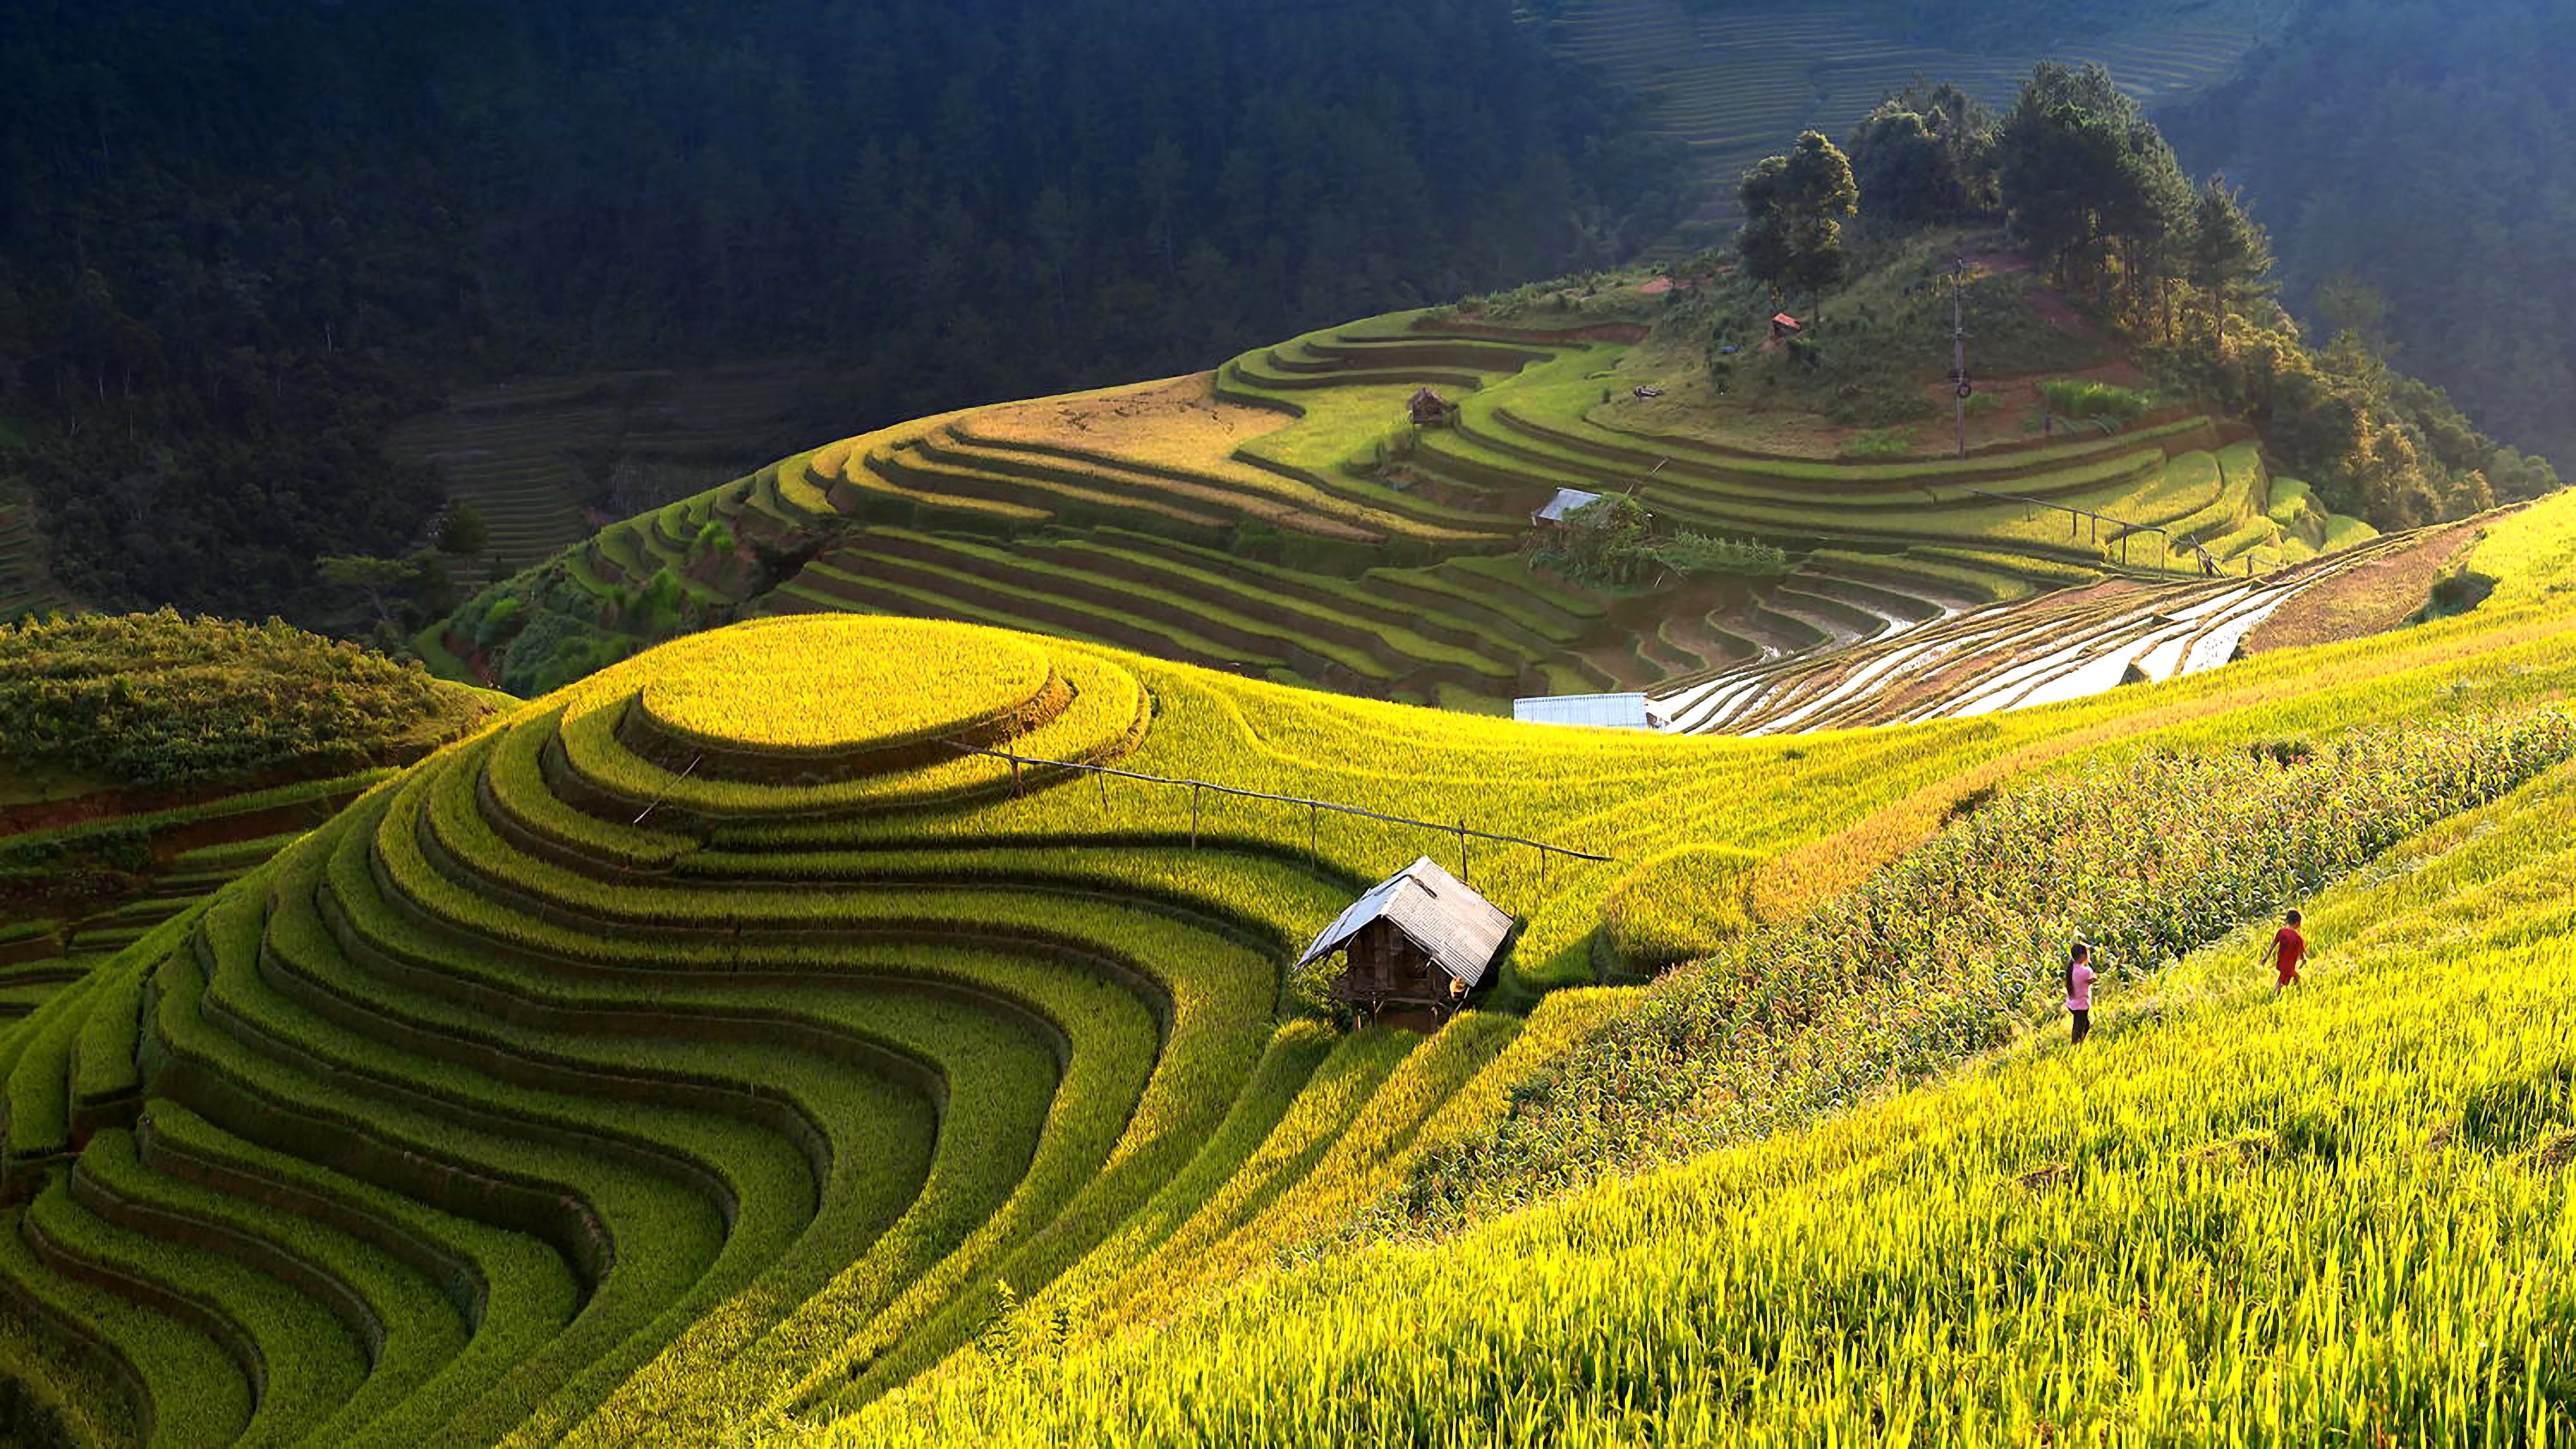 Rice terraces, Exquisite photos, Free download, Pexels stock photos, 3840x2160 4K Desktop